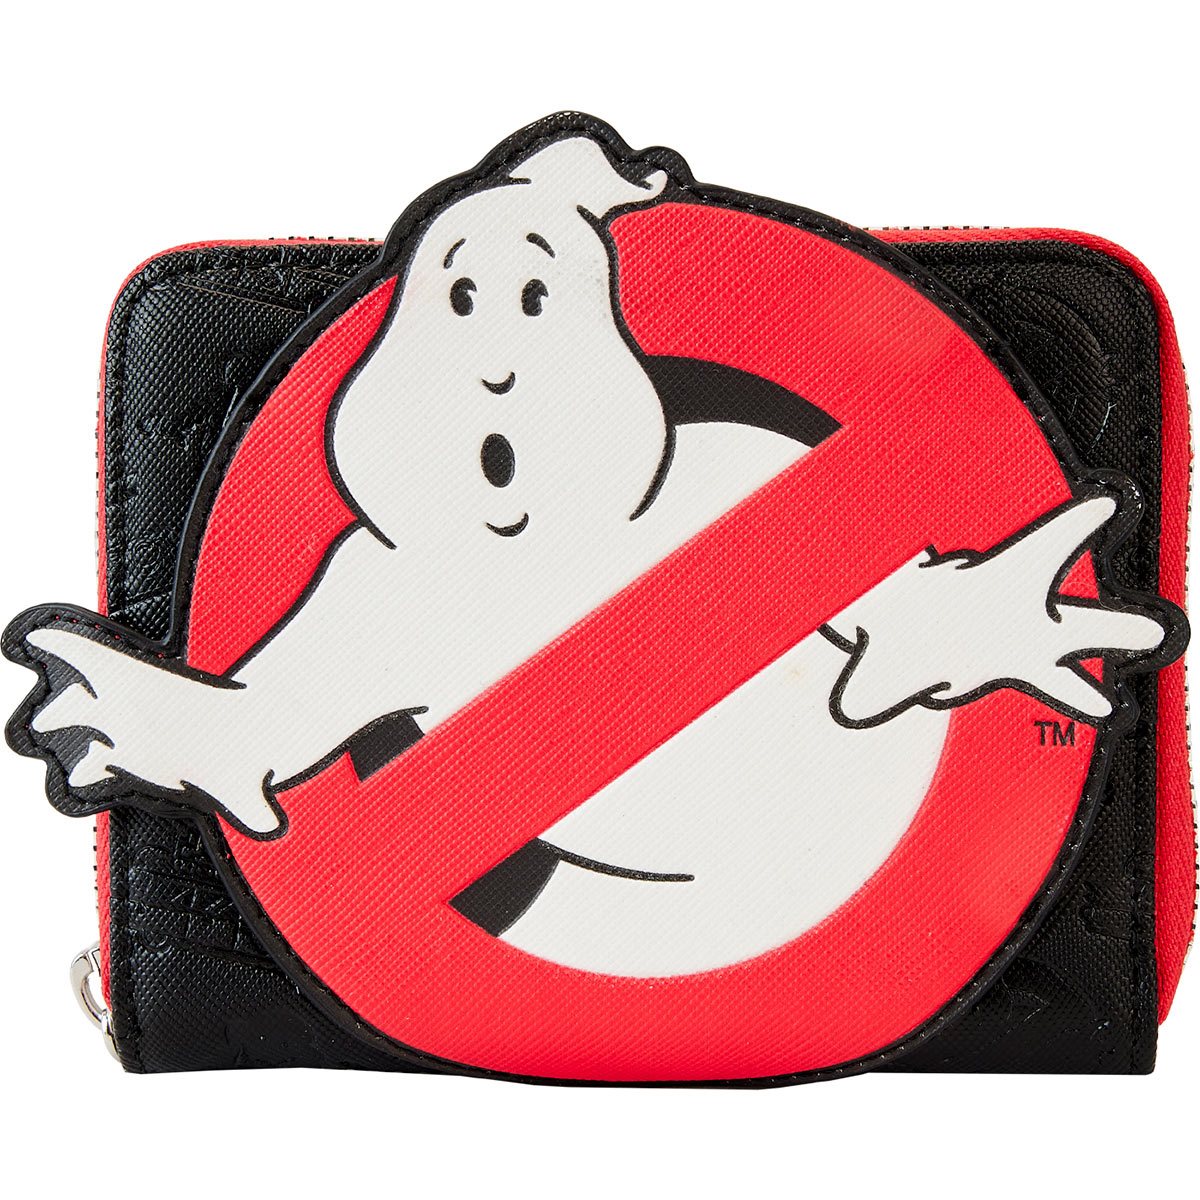 Ghostbusters Logo Lamp